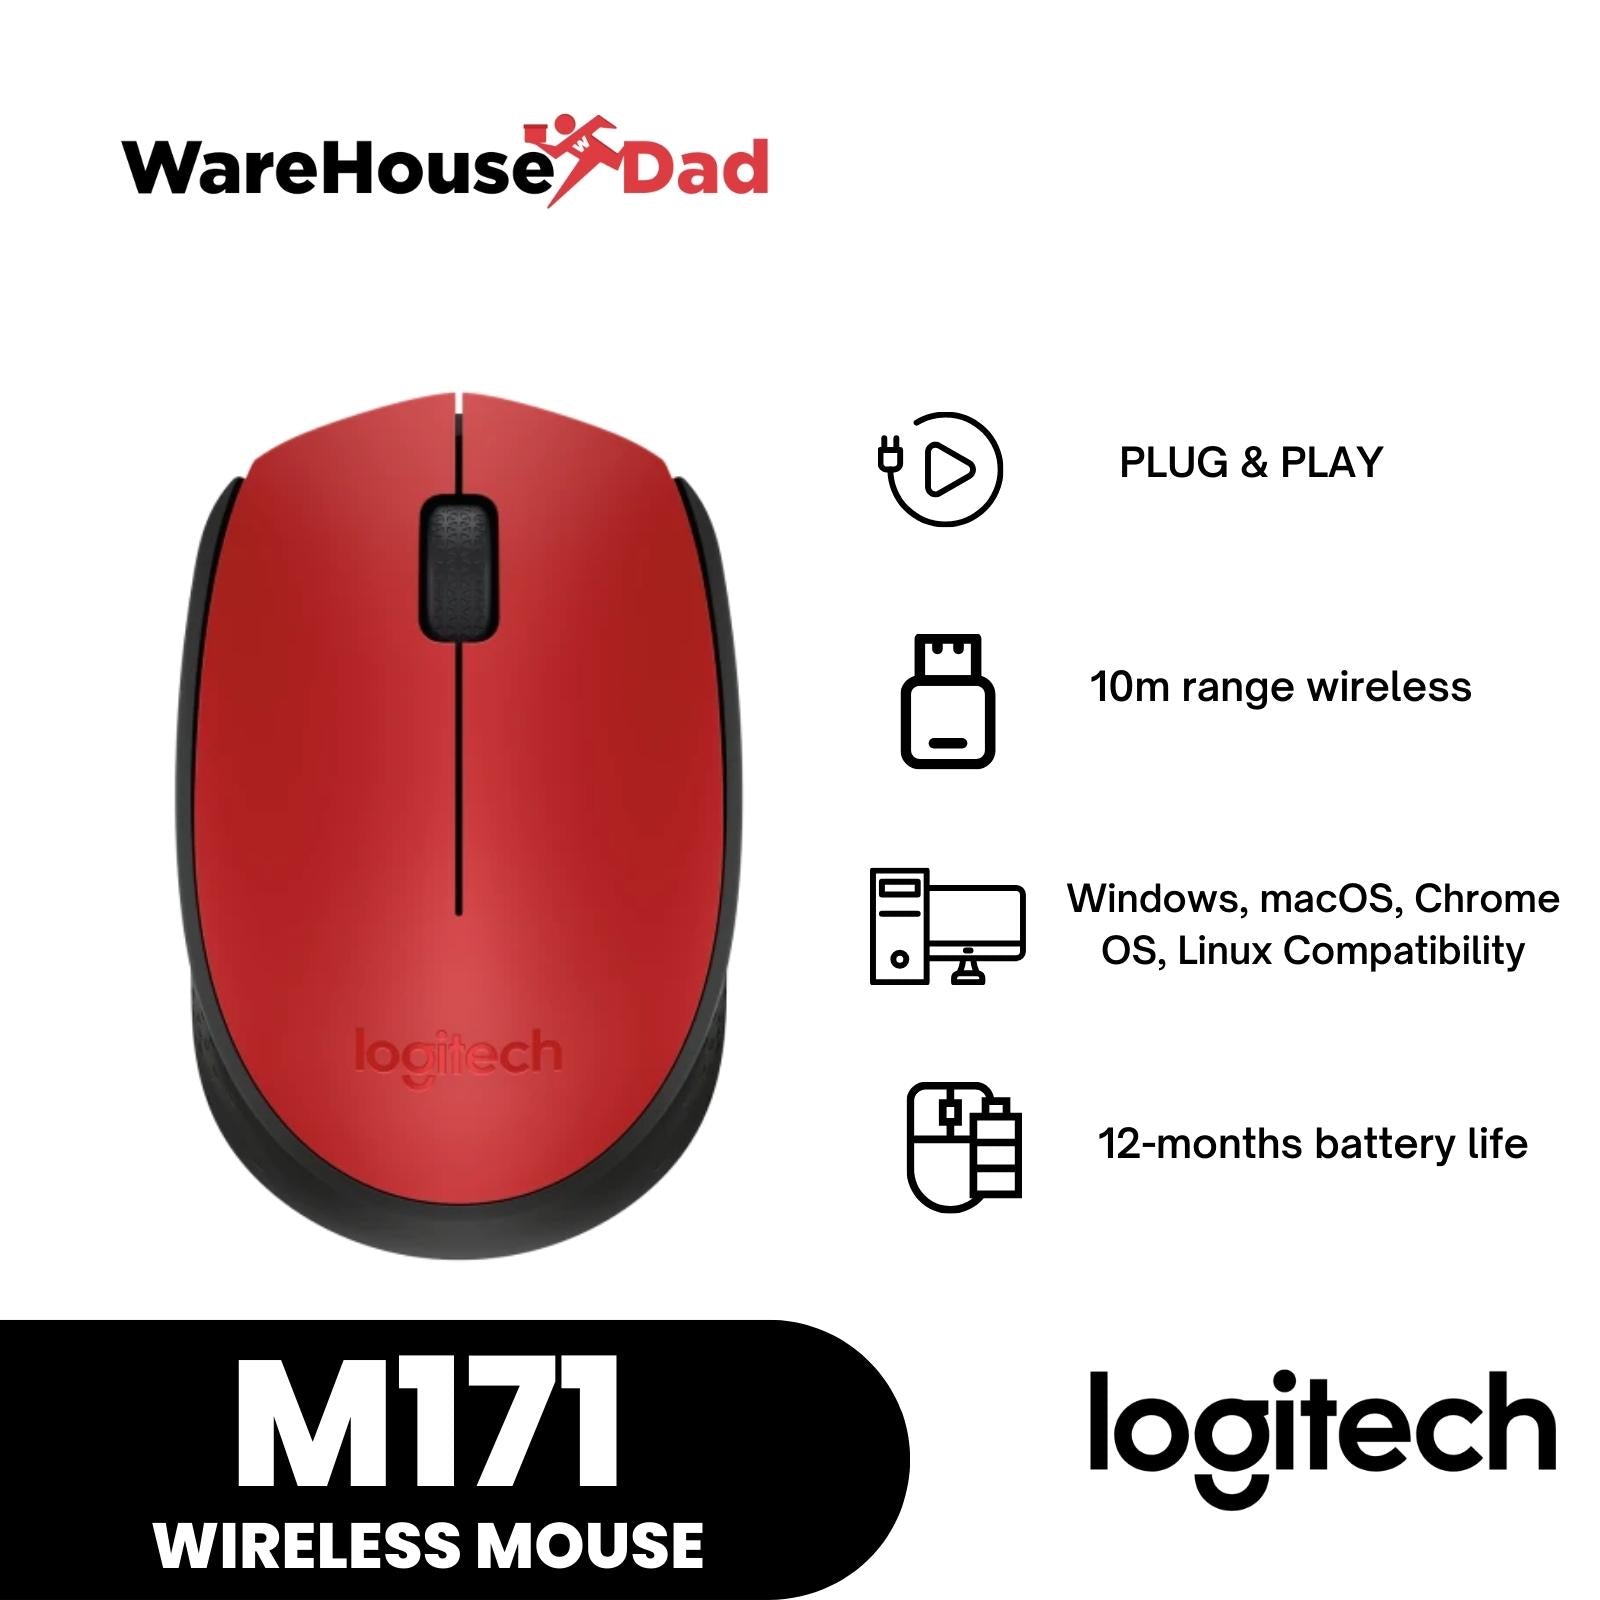 Logitech M171 Wireless Mouse WarehouseDad – Plug & Simplicity Play